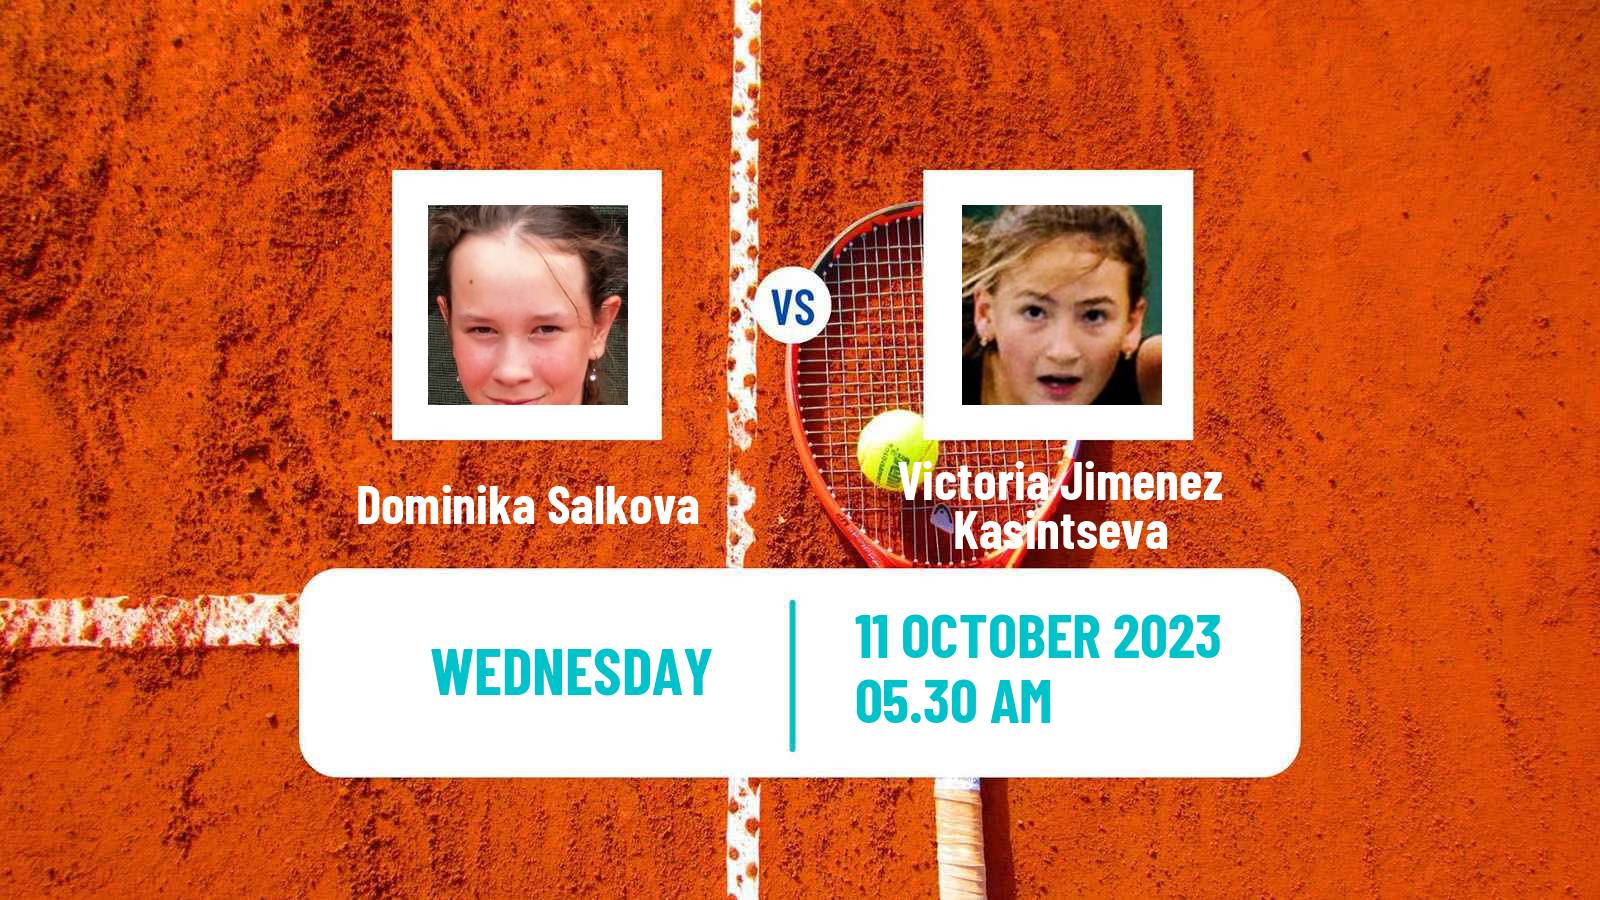 Tennis ITF W25 Seville Women Dominika Salkova - Victoria Jimenez Kasintseva